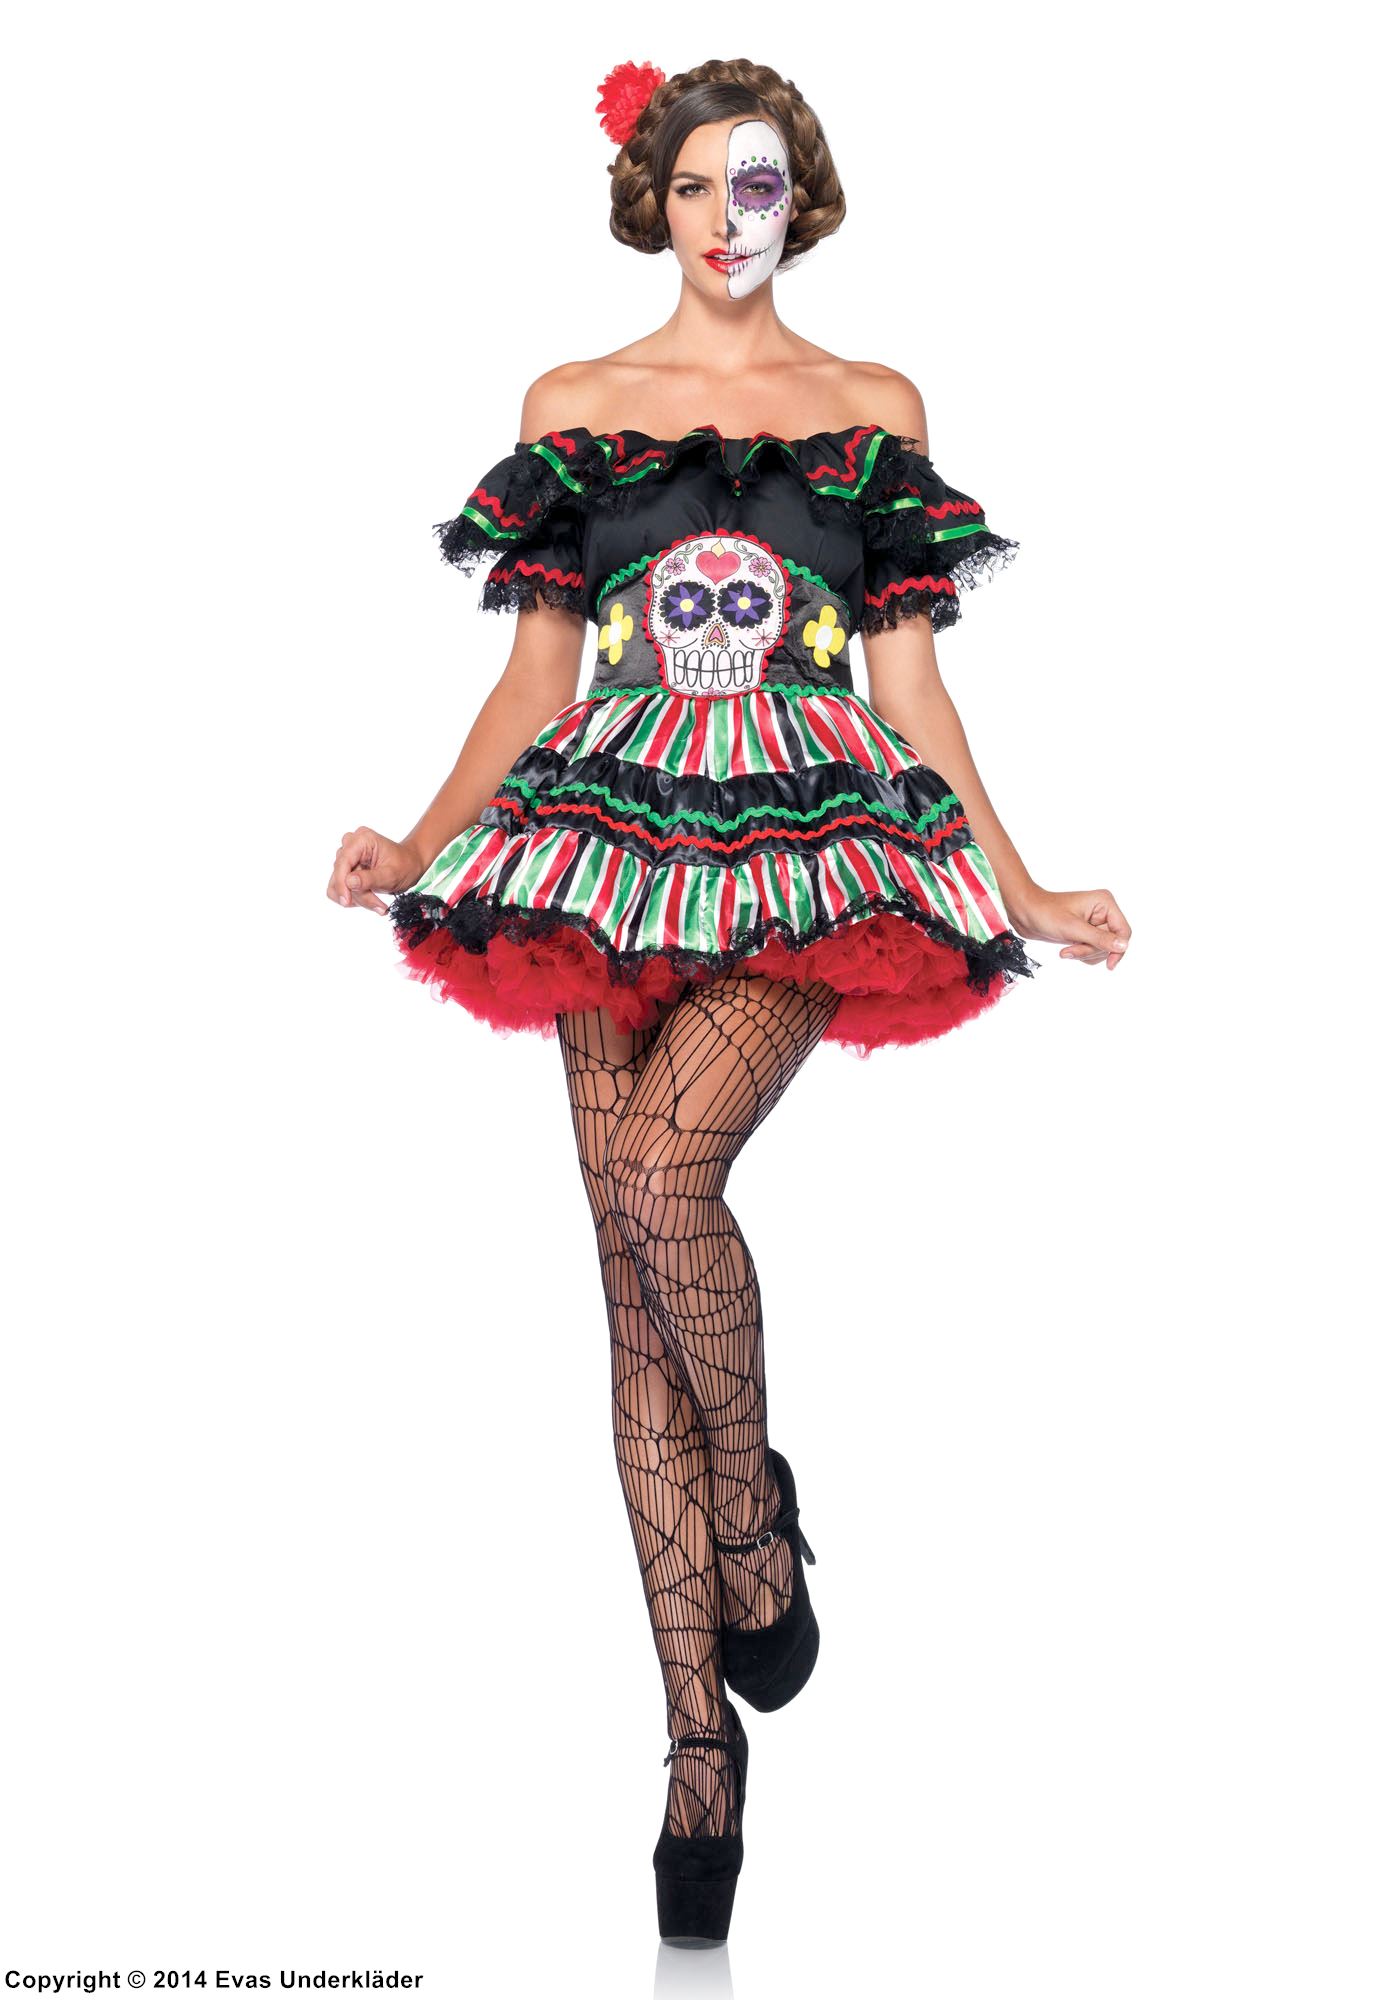 Day of the Dead (woman), costume dress, lace trim, ruffles, big bow, off shoulder, sugar skull (Calavera), vertical stripes